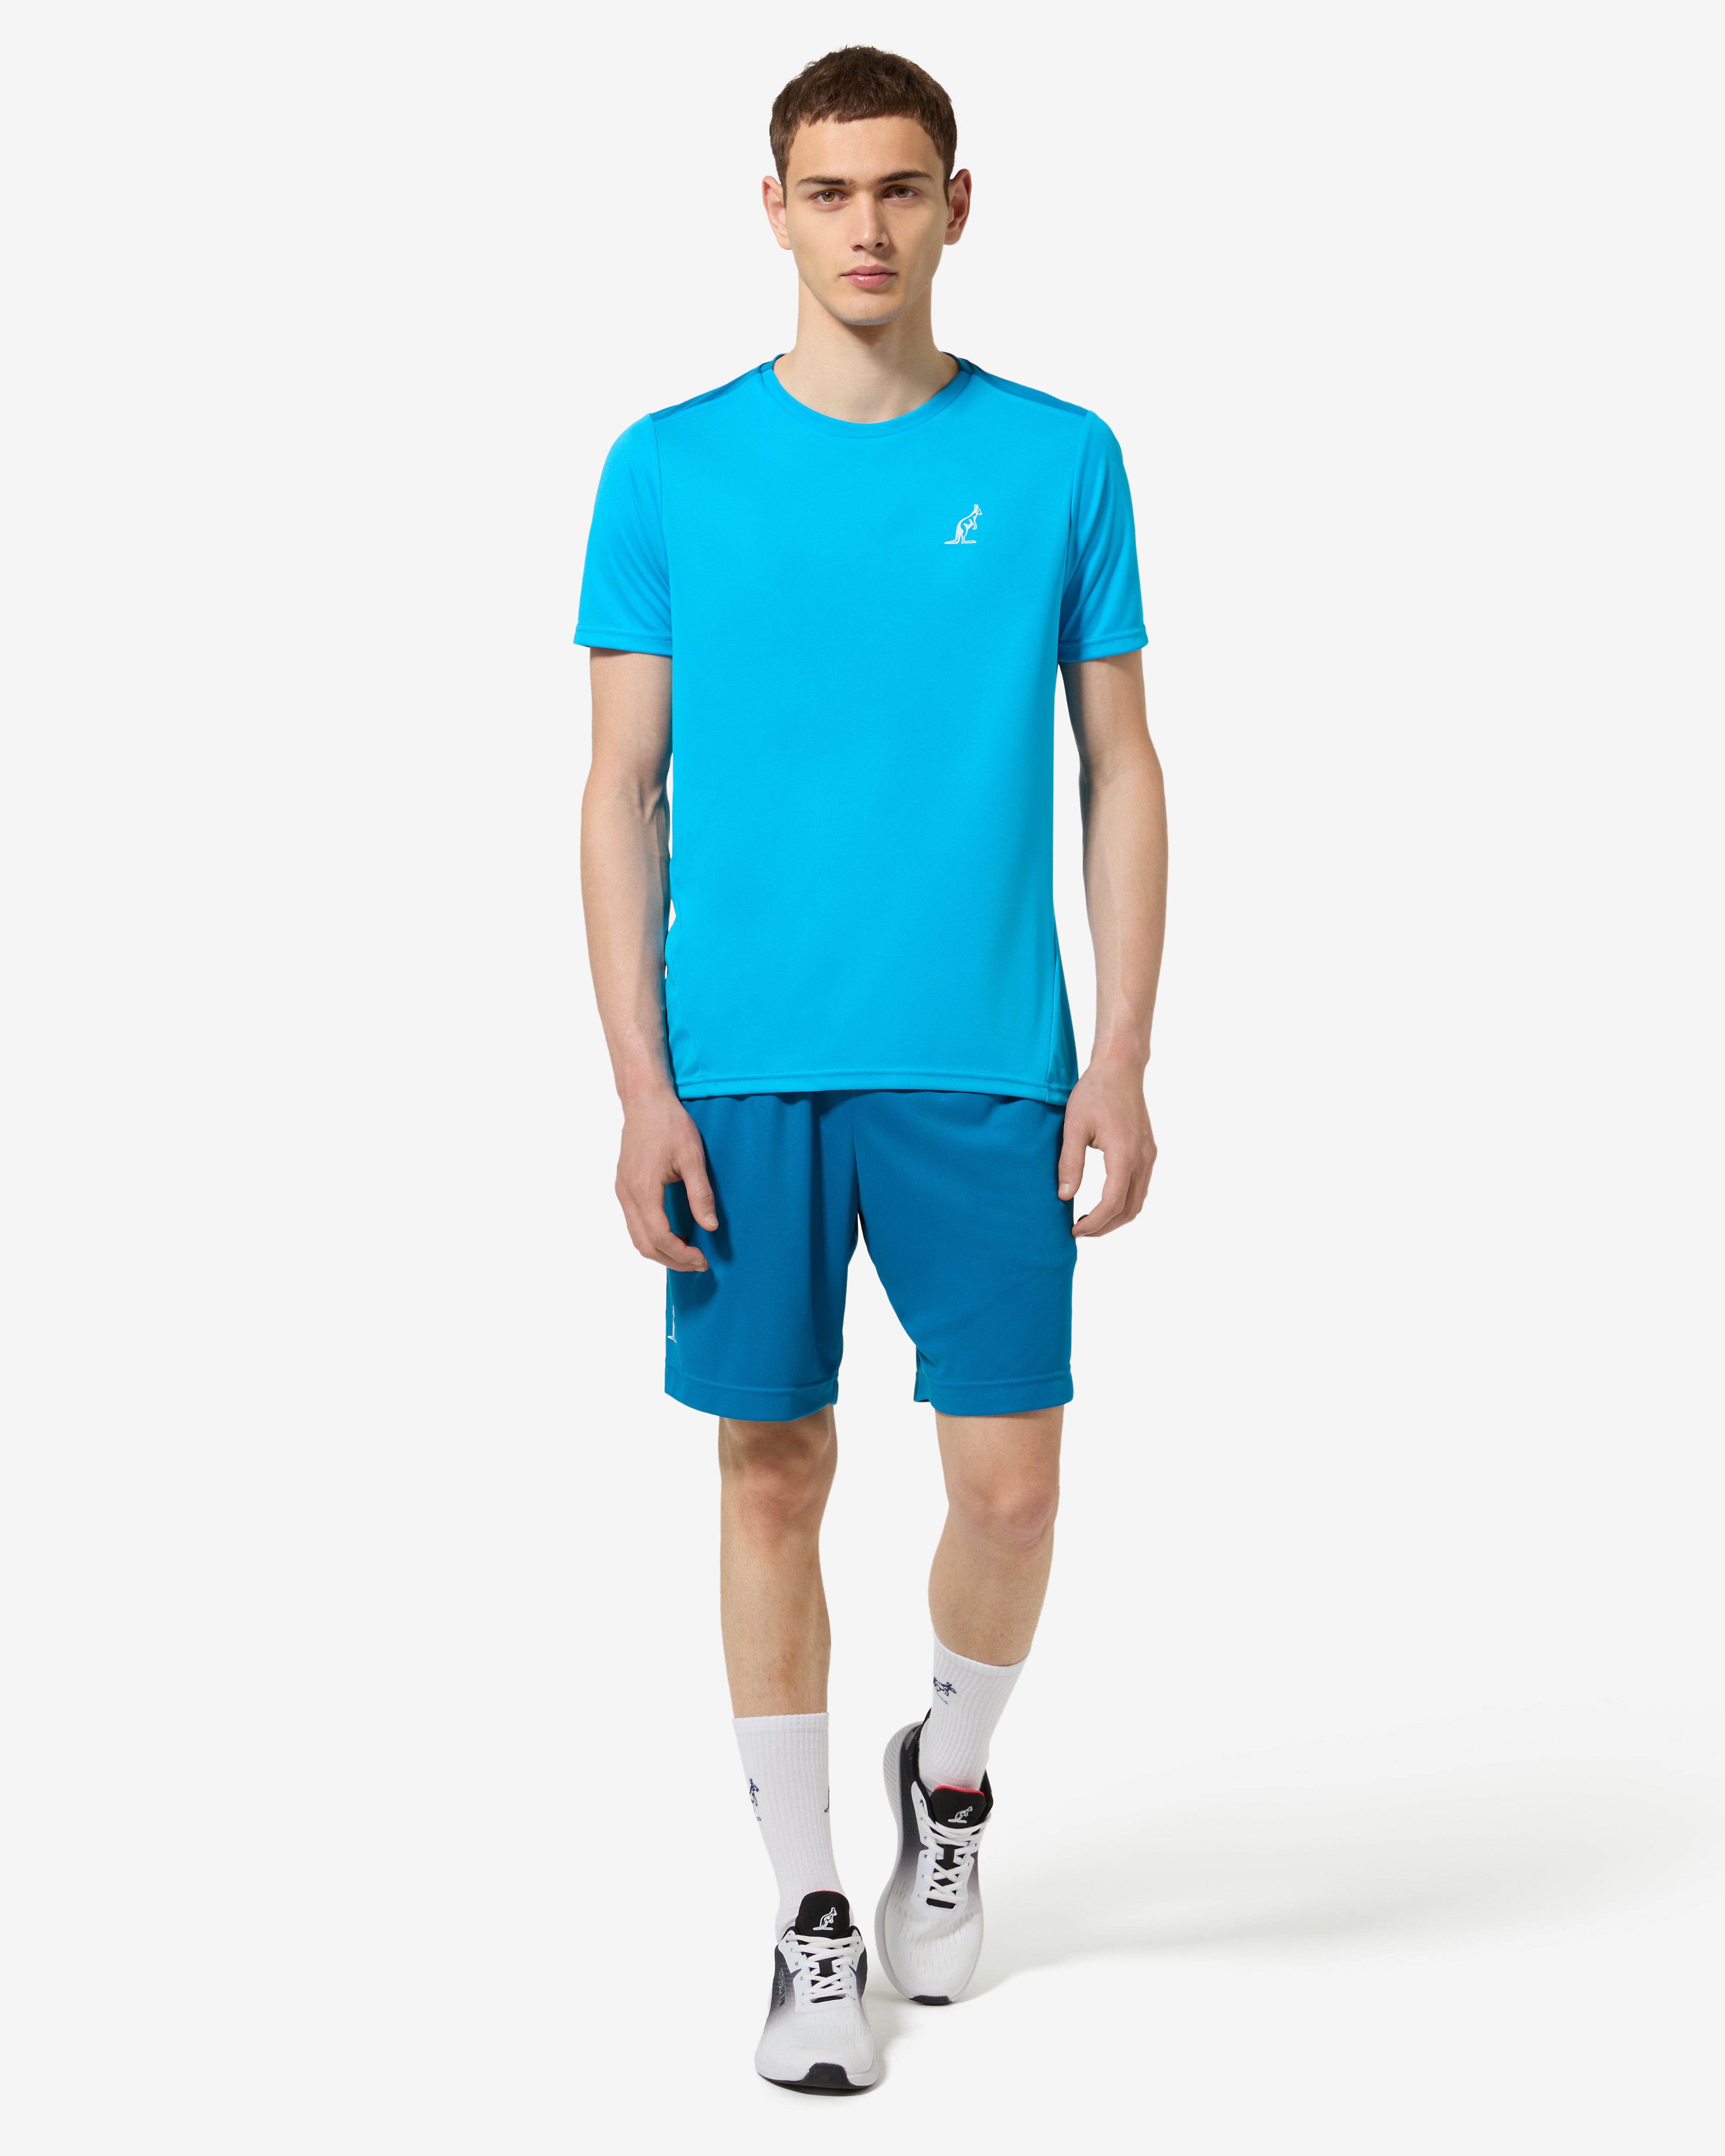 Energy T-shirt: Australian Tennis